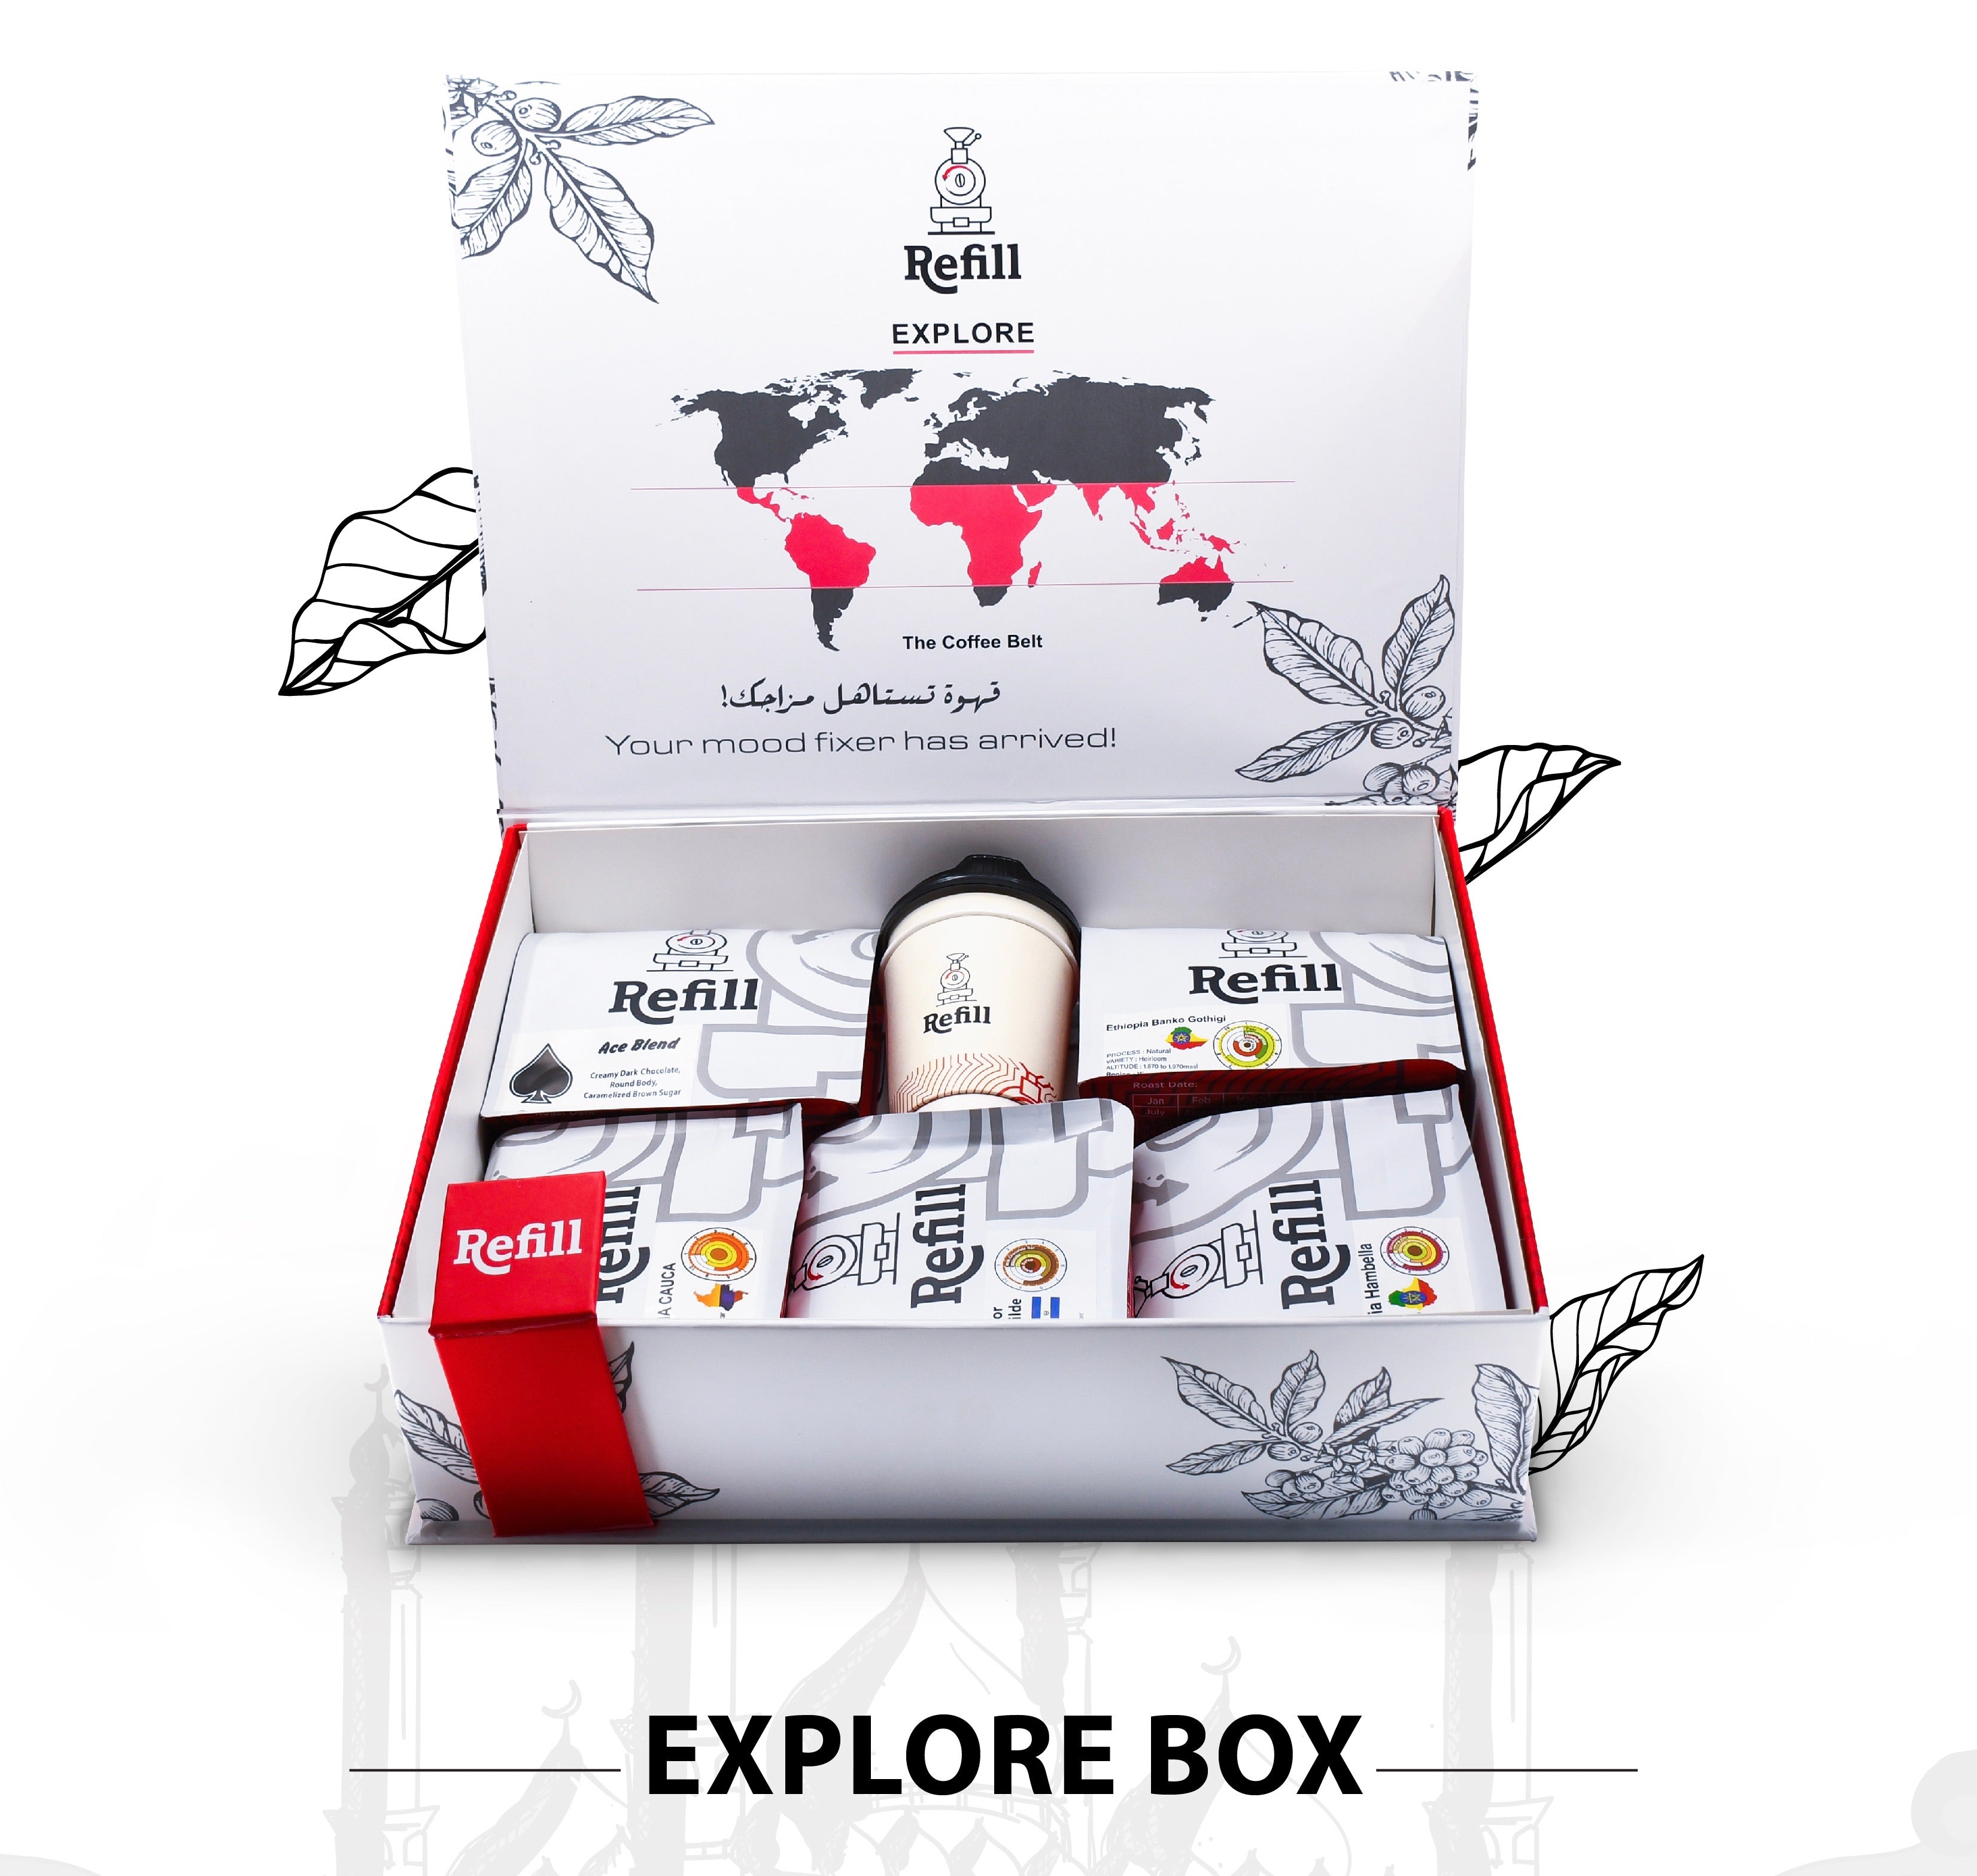 “Explore” Refill Box - صندوق “استكشف” ريفل